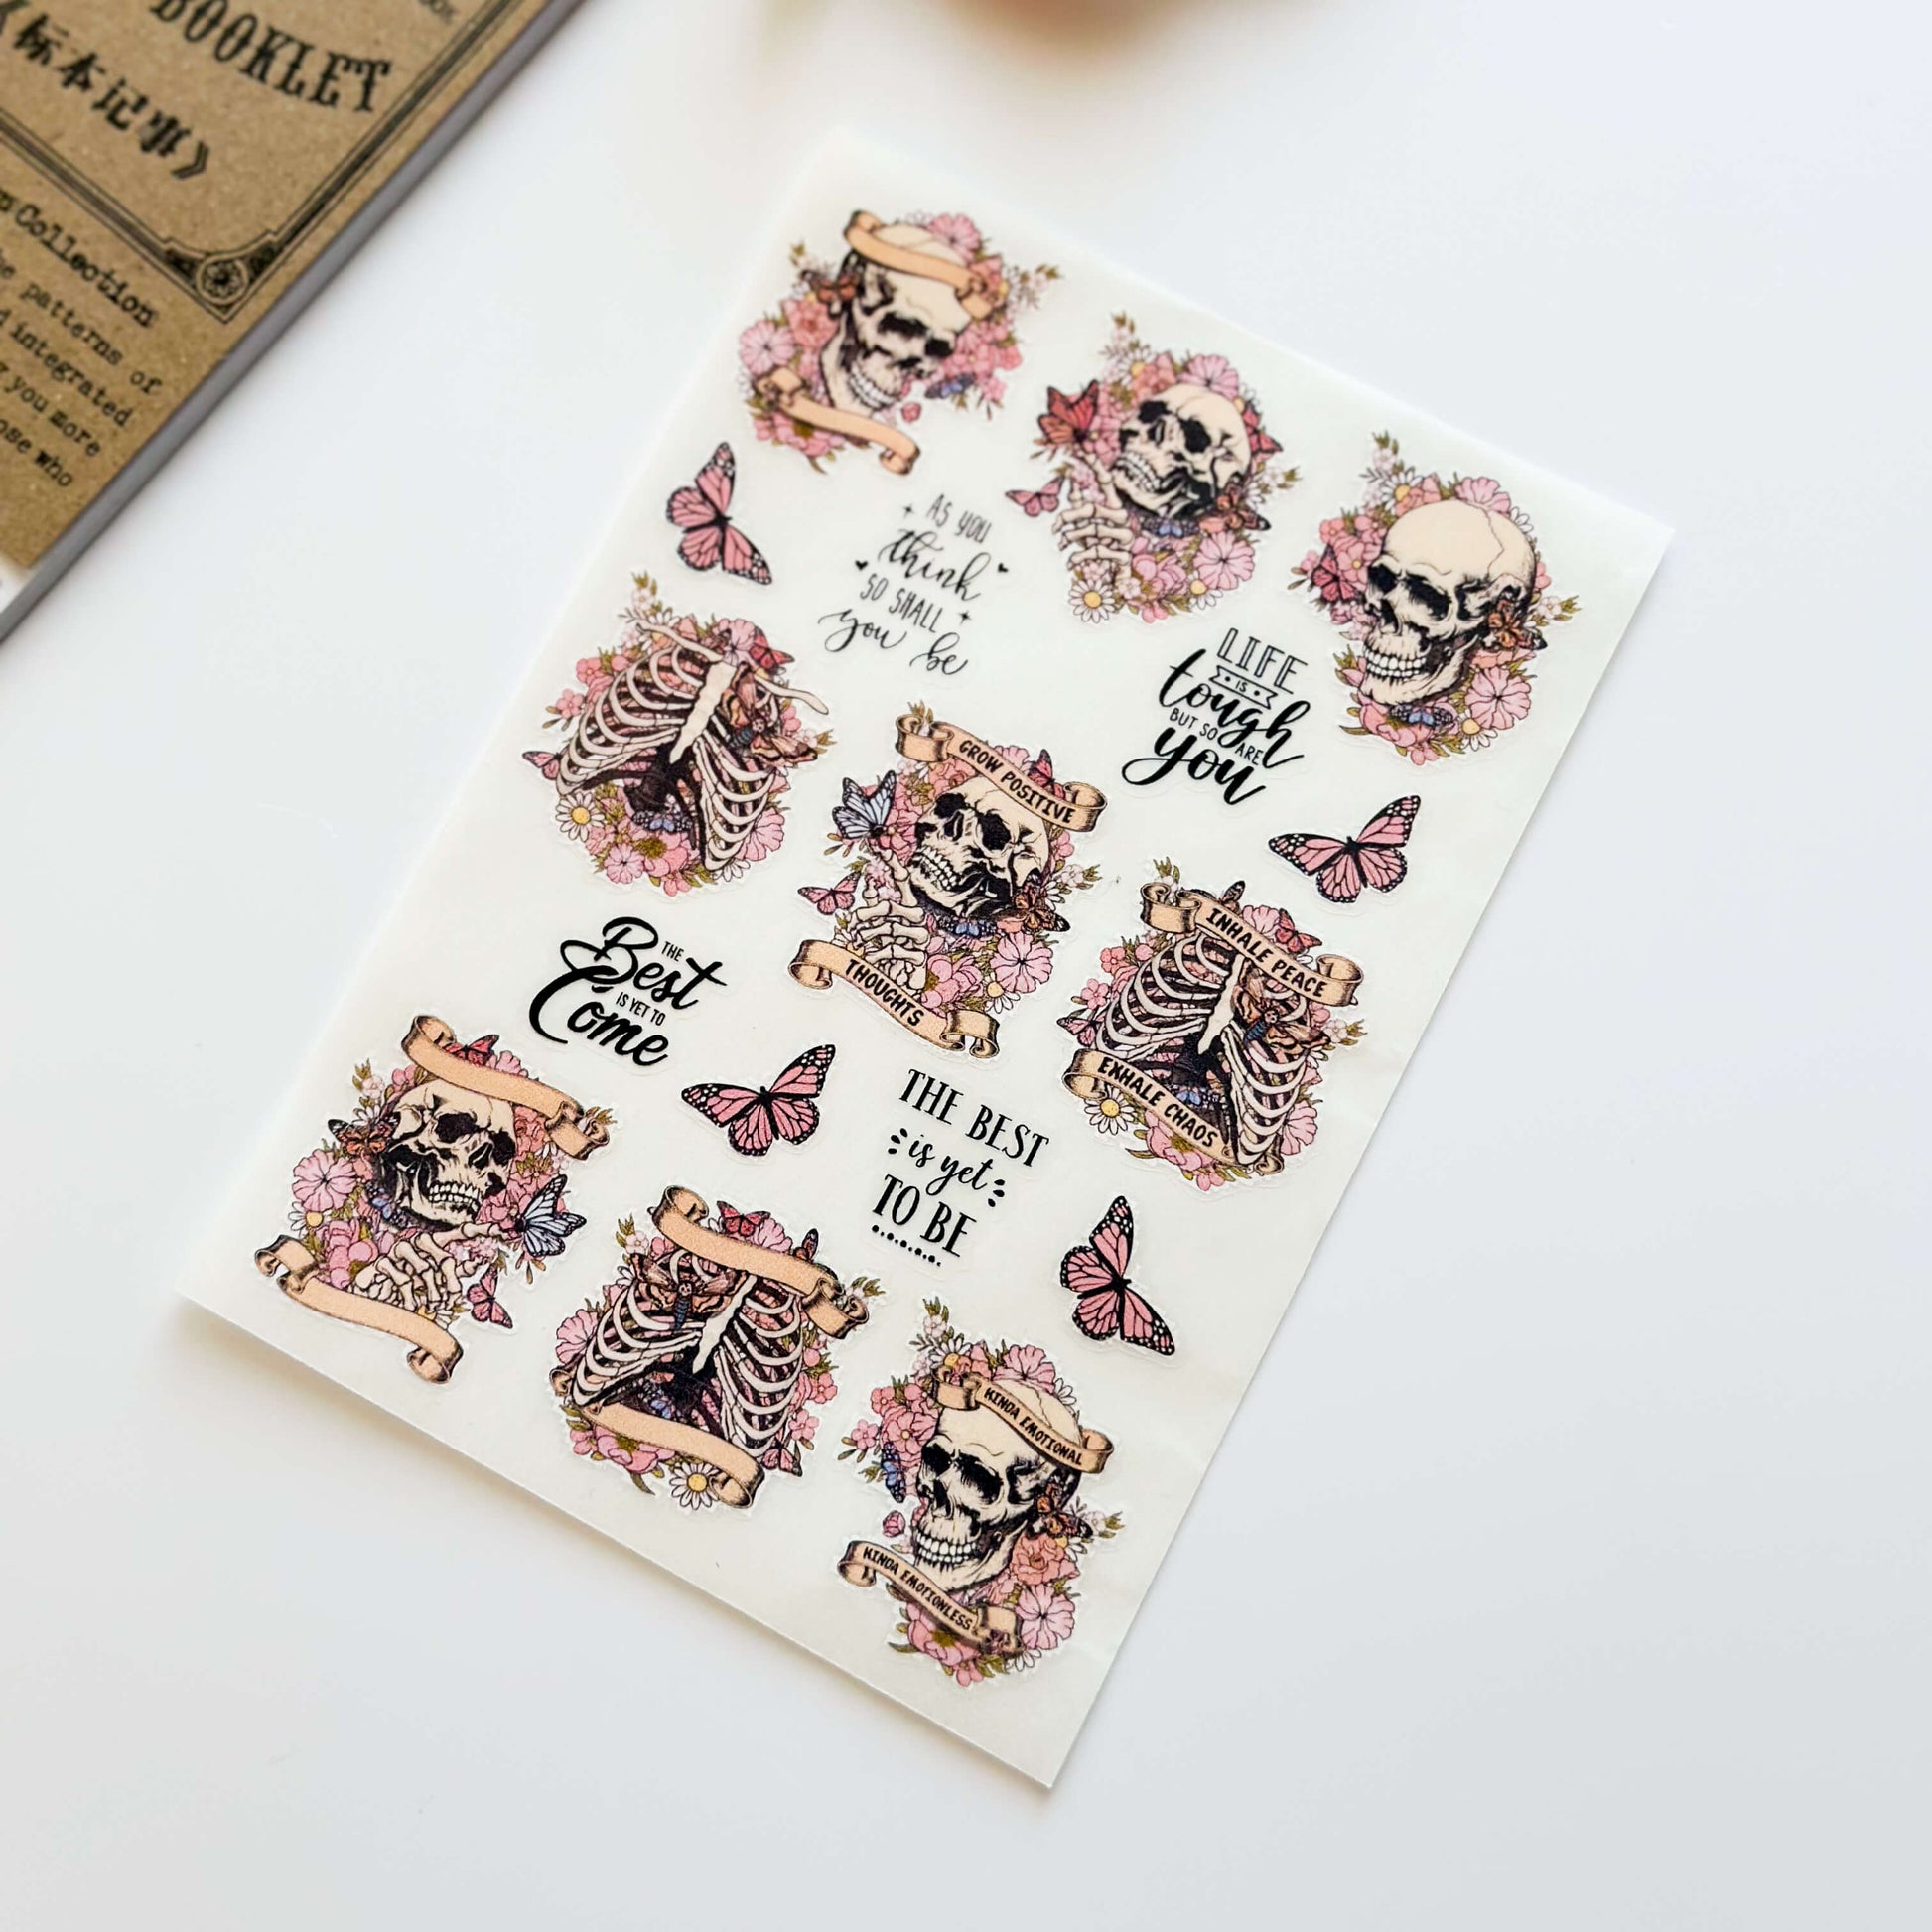 Vinyl sticker sheet with pink butterflies and skulls illustrations